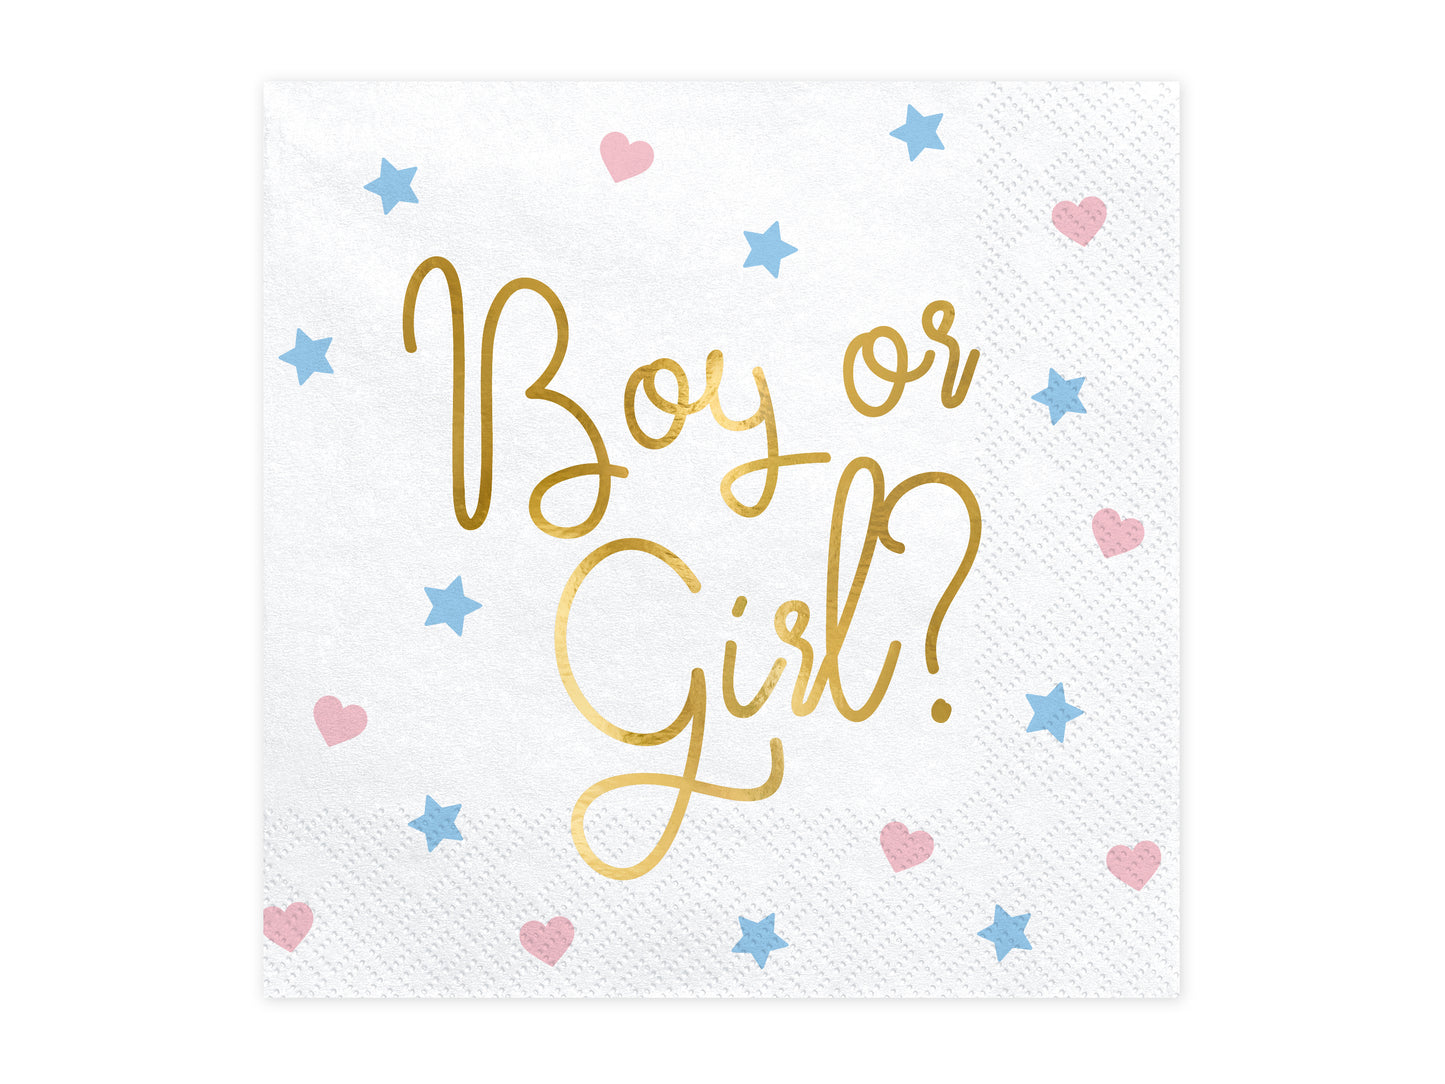 Servietten | Boy or Girl | Genderparty